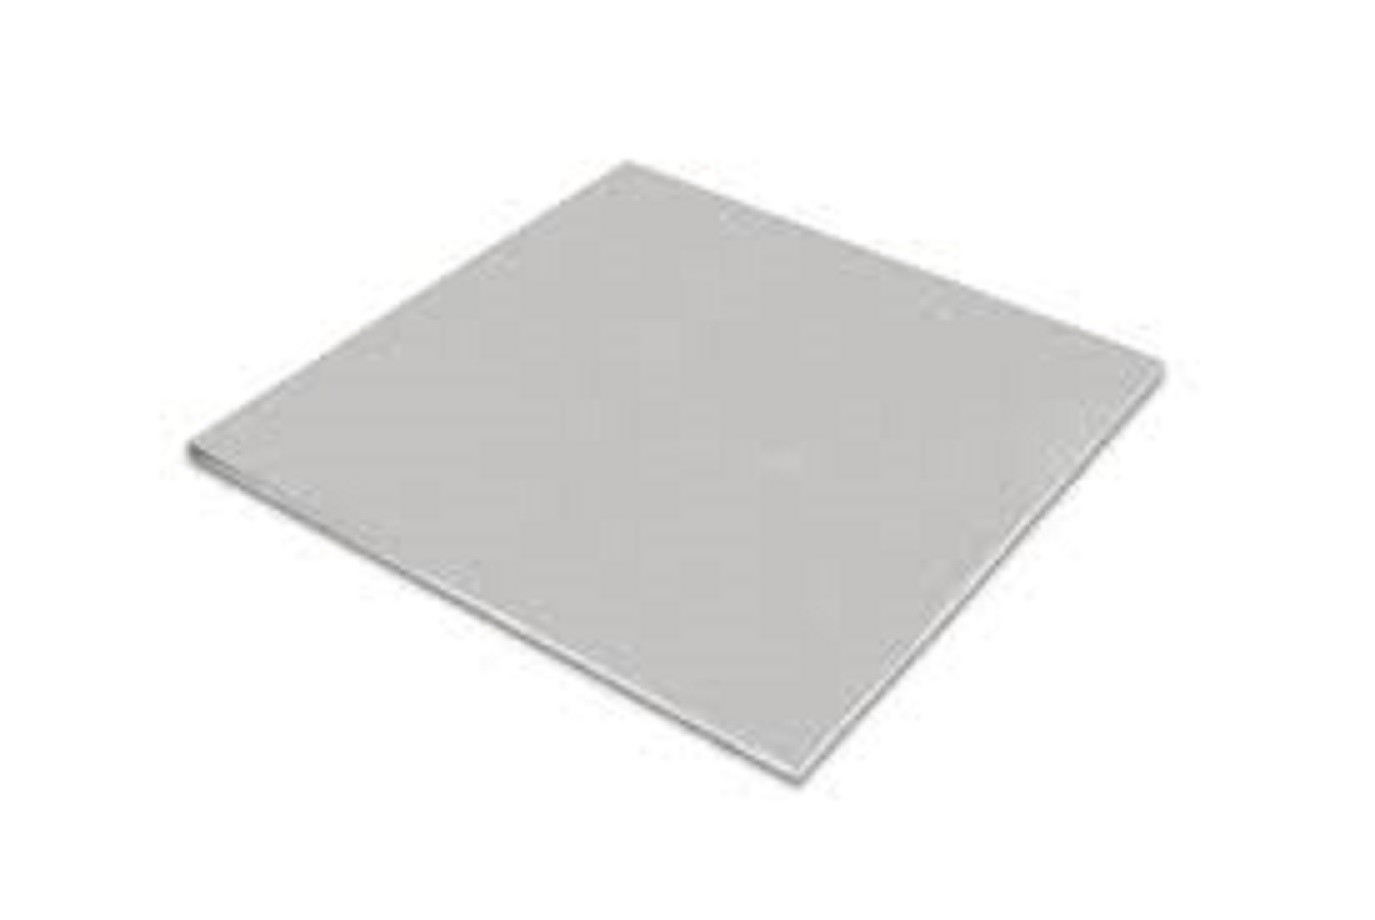 Aluminum Alloy Flat Plate Square Sheet Board 1mm 10x10cm 15x15cm 20x20cm